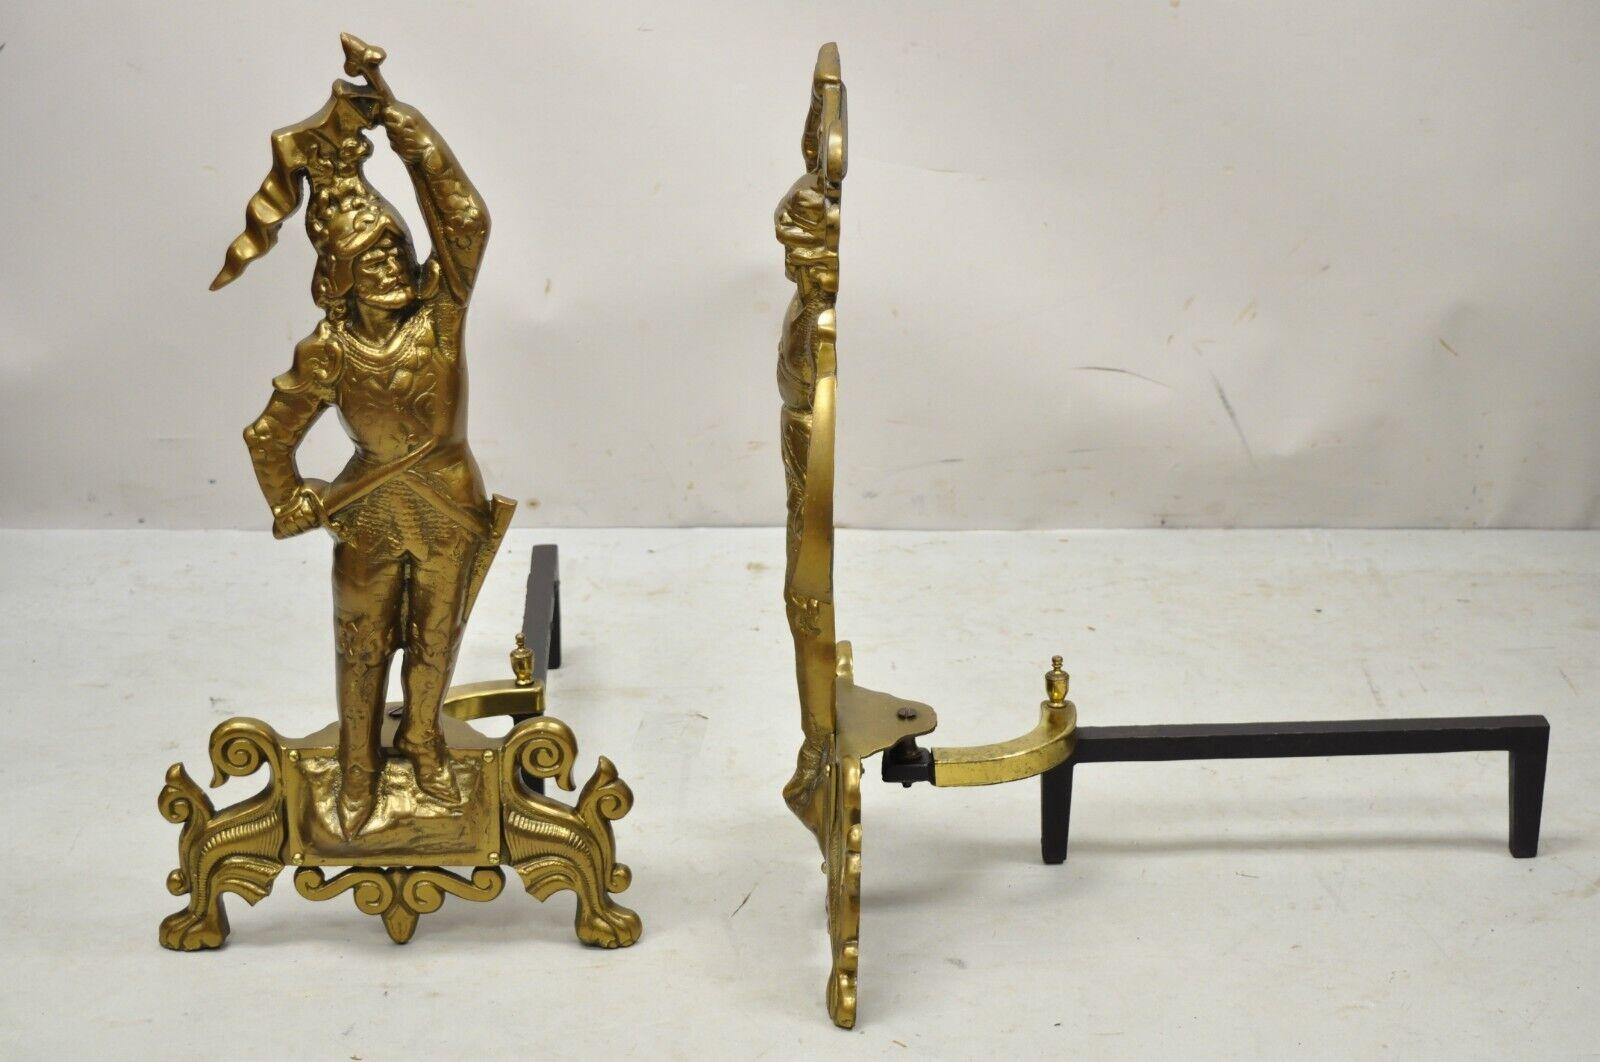 Vtg Cast Brass Figural Renaissance Soldier Warrior Fireplace Andirons - a Pair For Sale 3